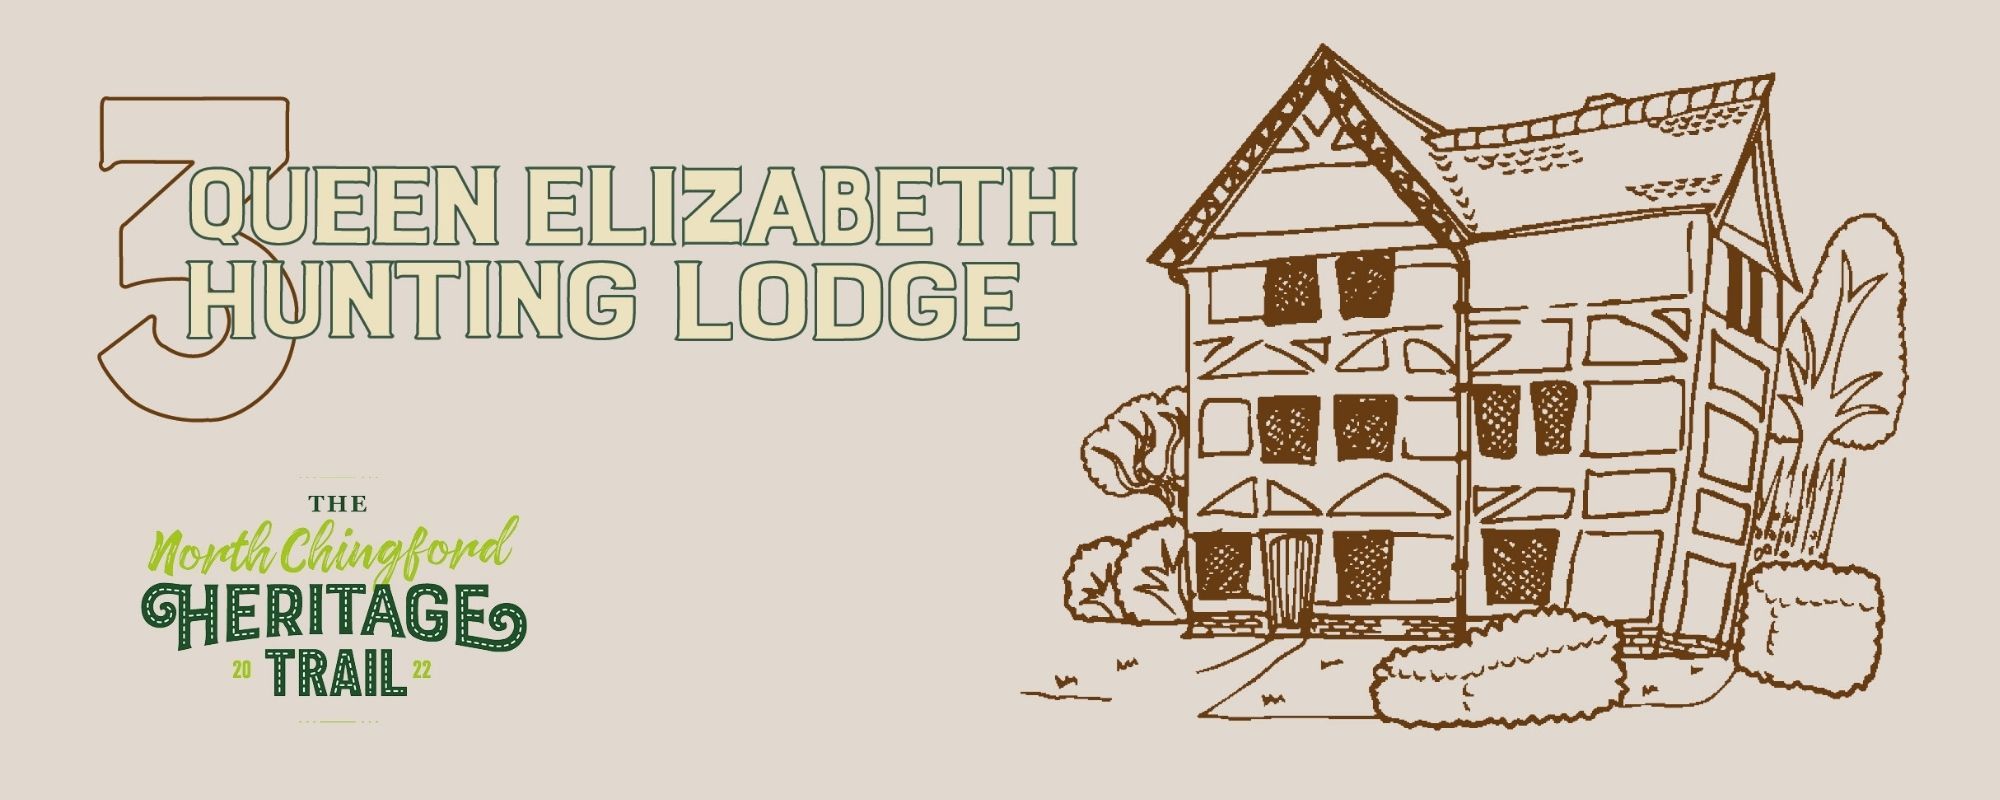 Queen Elizabeth Hunting Lodge